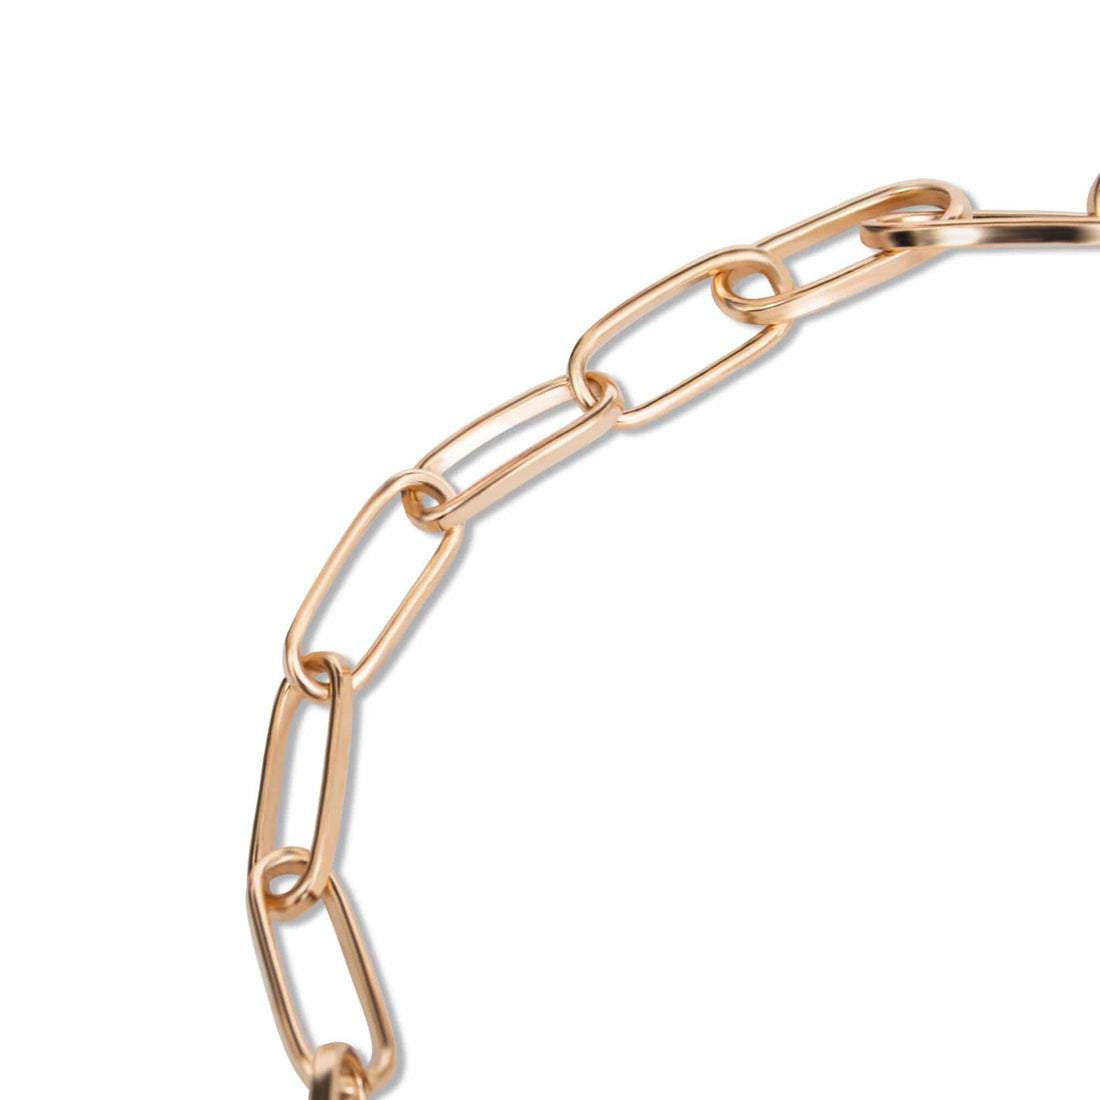 Eyewear Chain  - Gold Link Glasses Chain